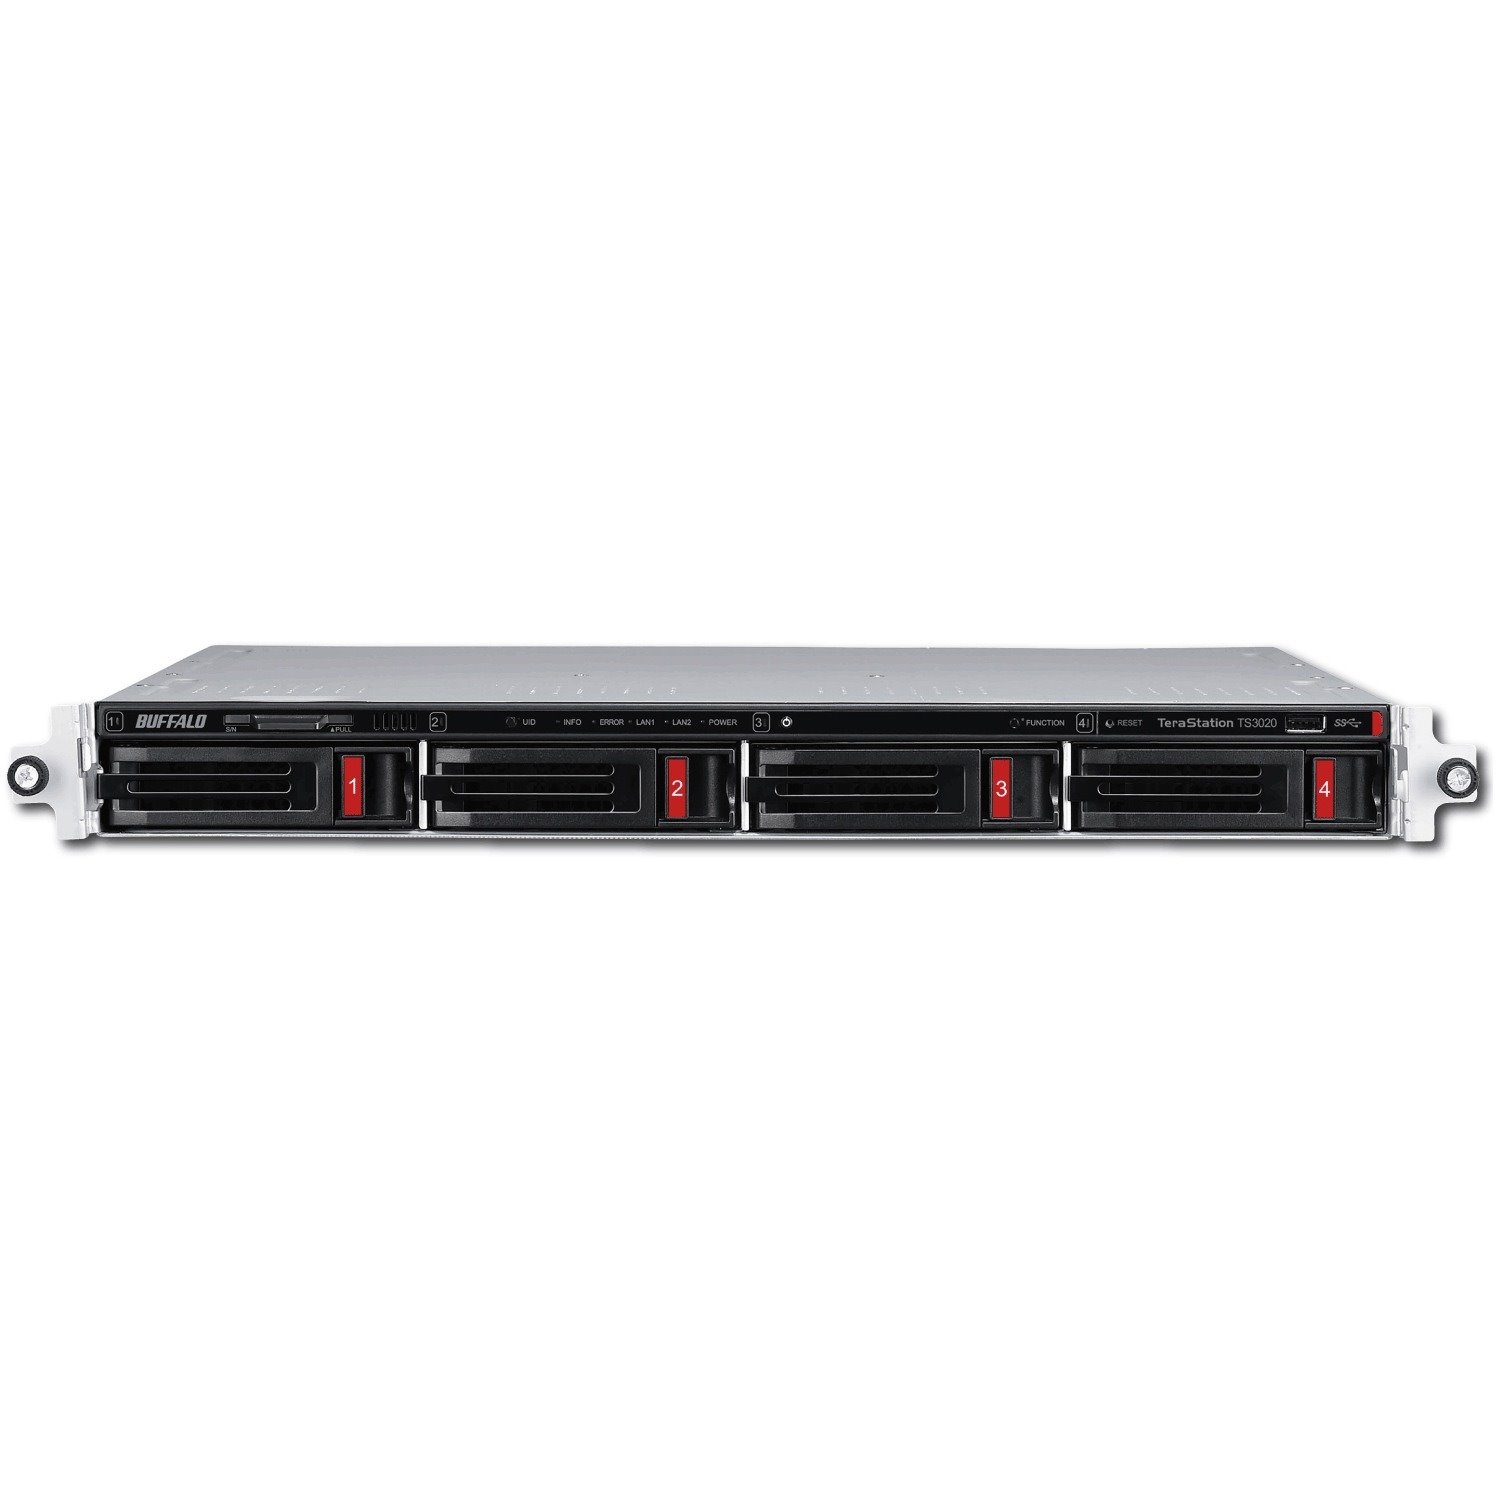 Buffalo TeraStation 3420RN Rackmount 8TB NAS Hard Drives Included (2 x 4TB, 4 Bay)